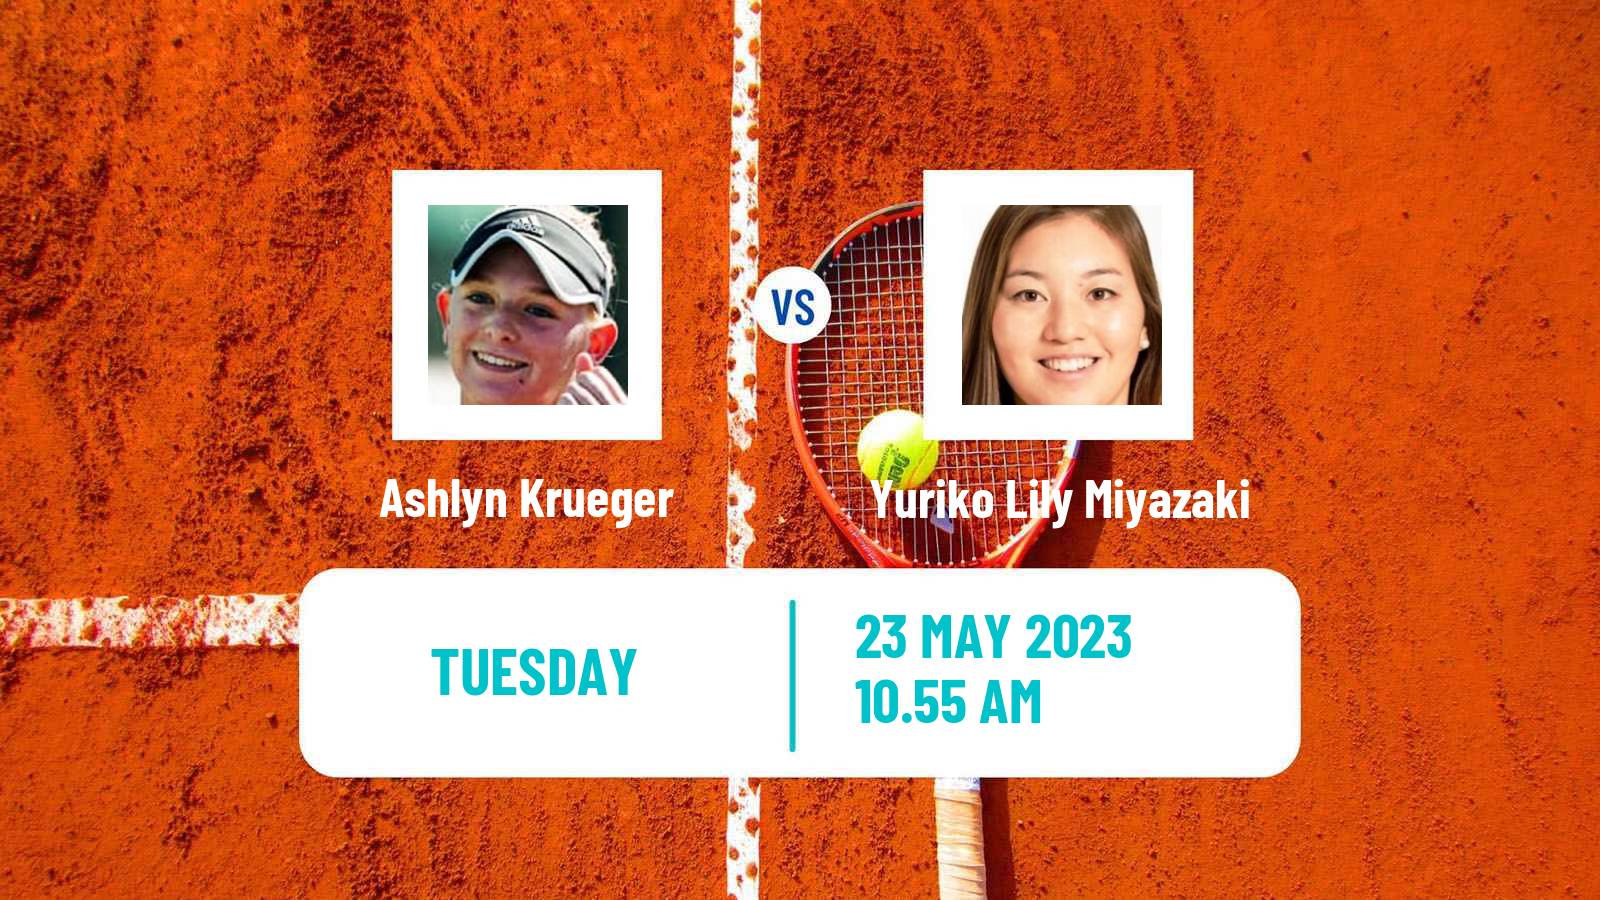 Tennis WTA Roland Garros Ashlyn Krueger - Yuriko Lily Miyazaki